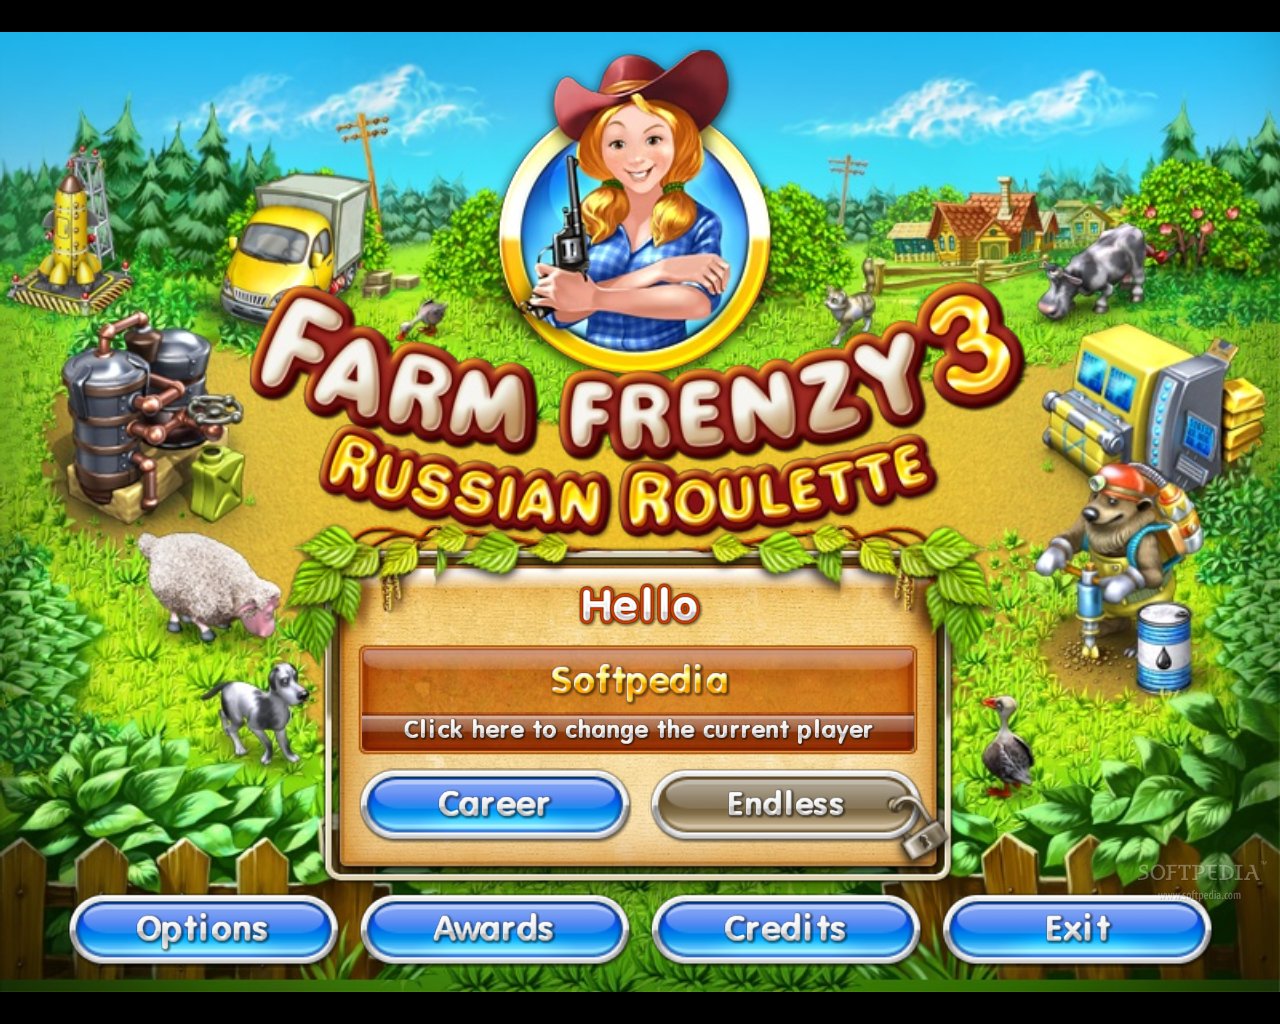 http://i1-games.softpedia-static.com/screenshots/Farm-Frenzy-3-Russian-Roulette_1.jpg